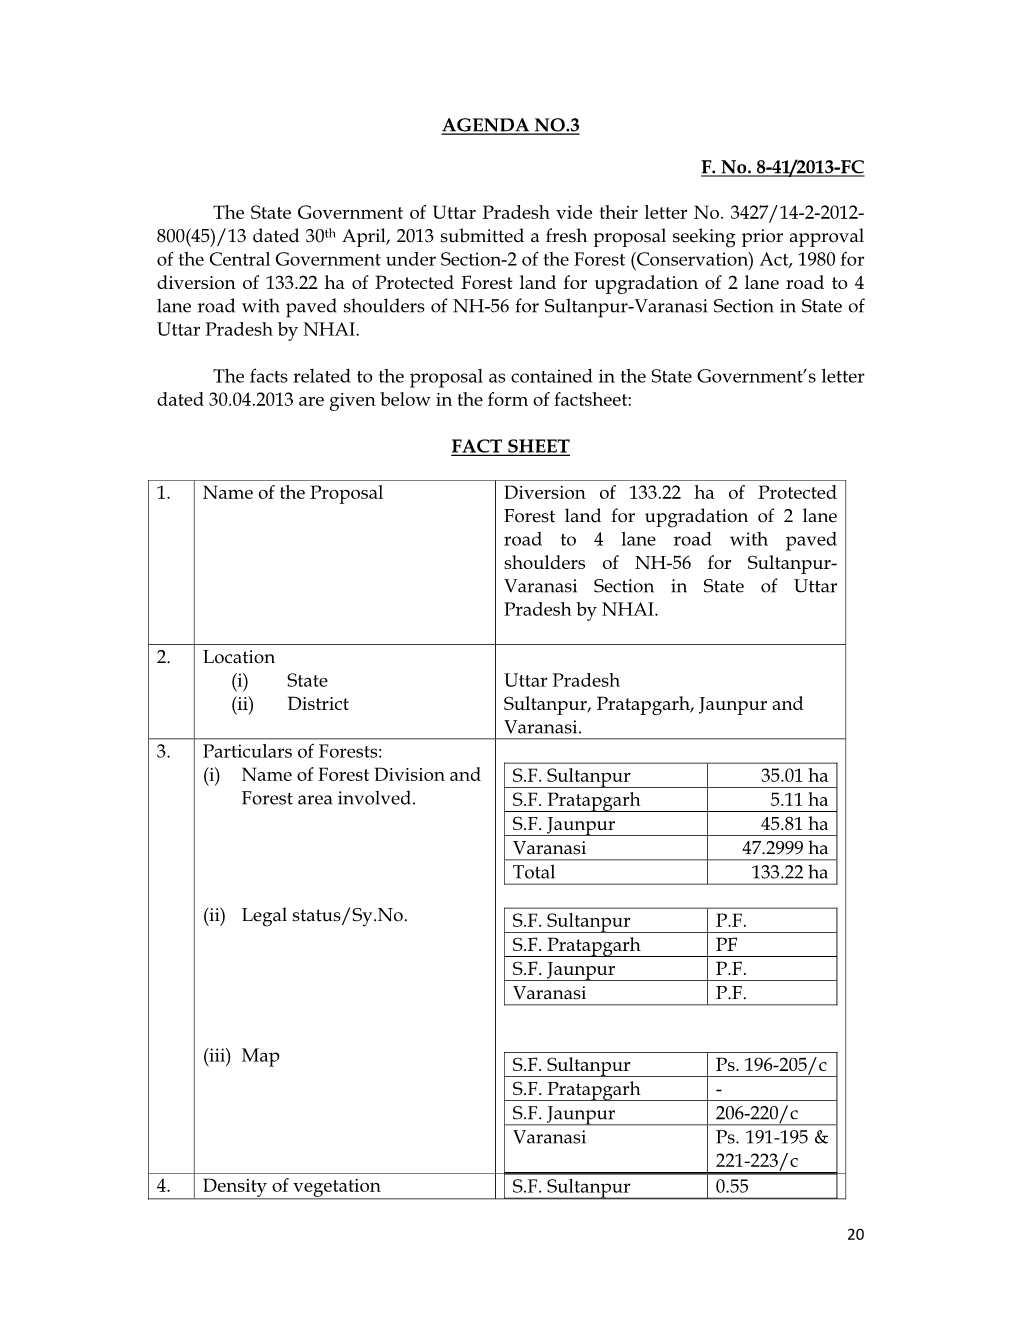 AGENDA NO.3 F. No. 8-41/2013-FC the State Government of Uttar